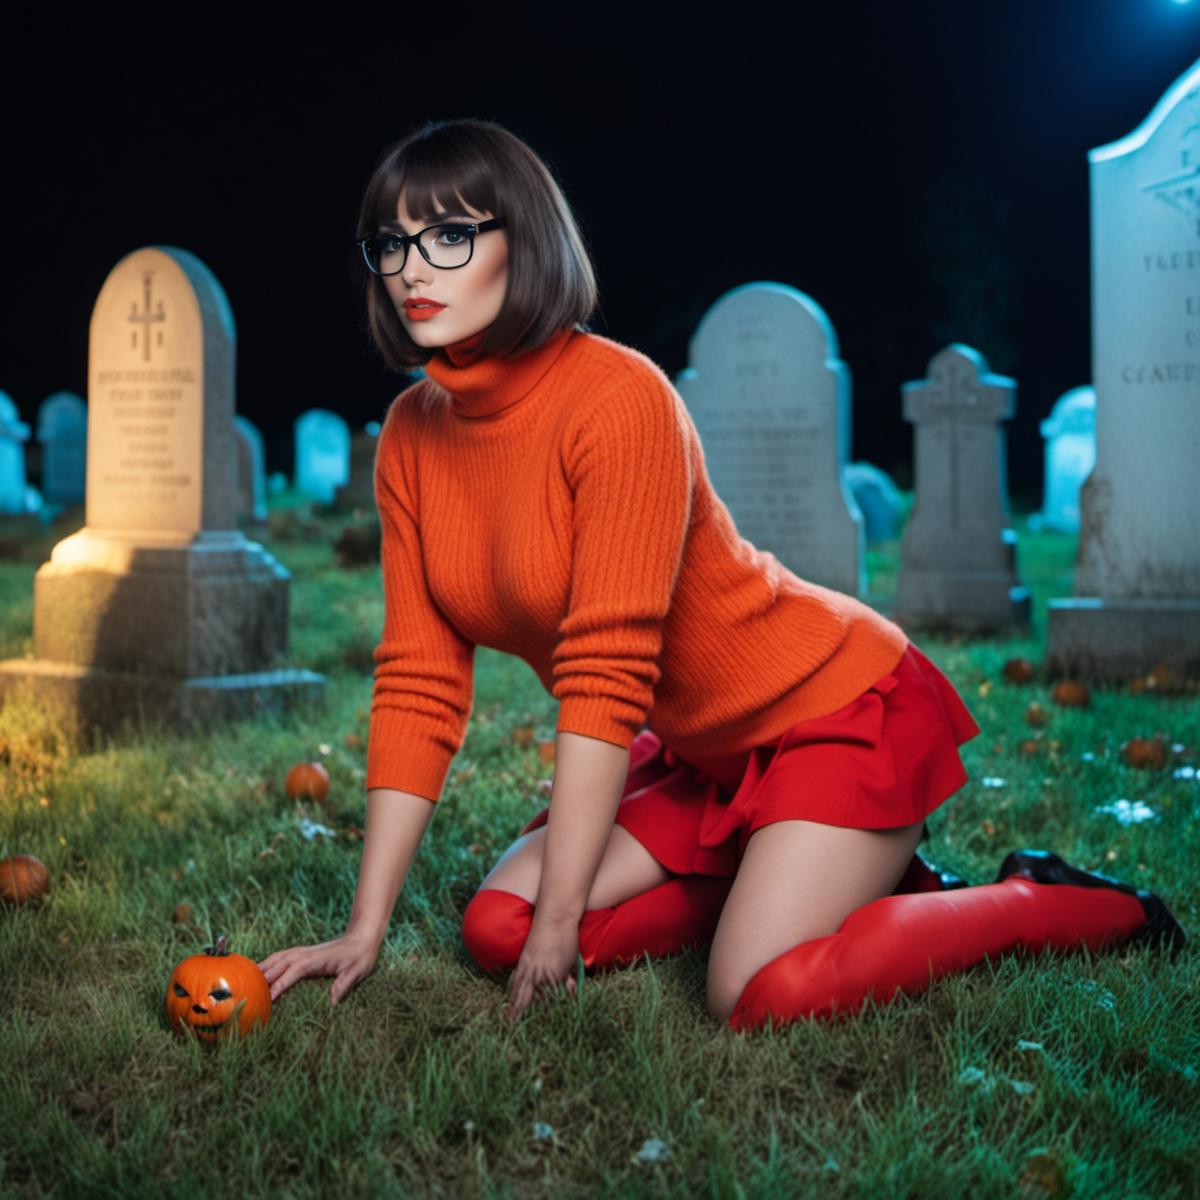 Velma Dinkley - Scooby-Doo franchise - Realistic SDXL image by PhotobAIt